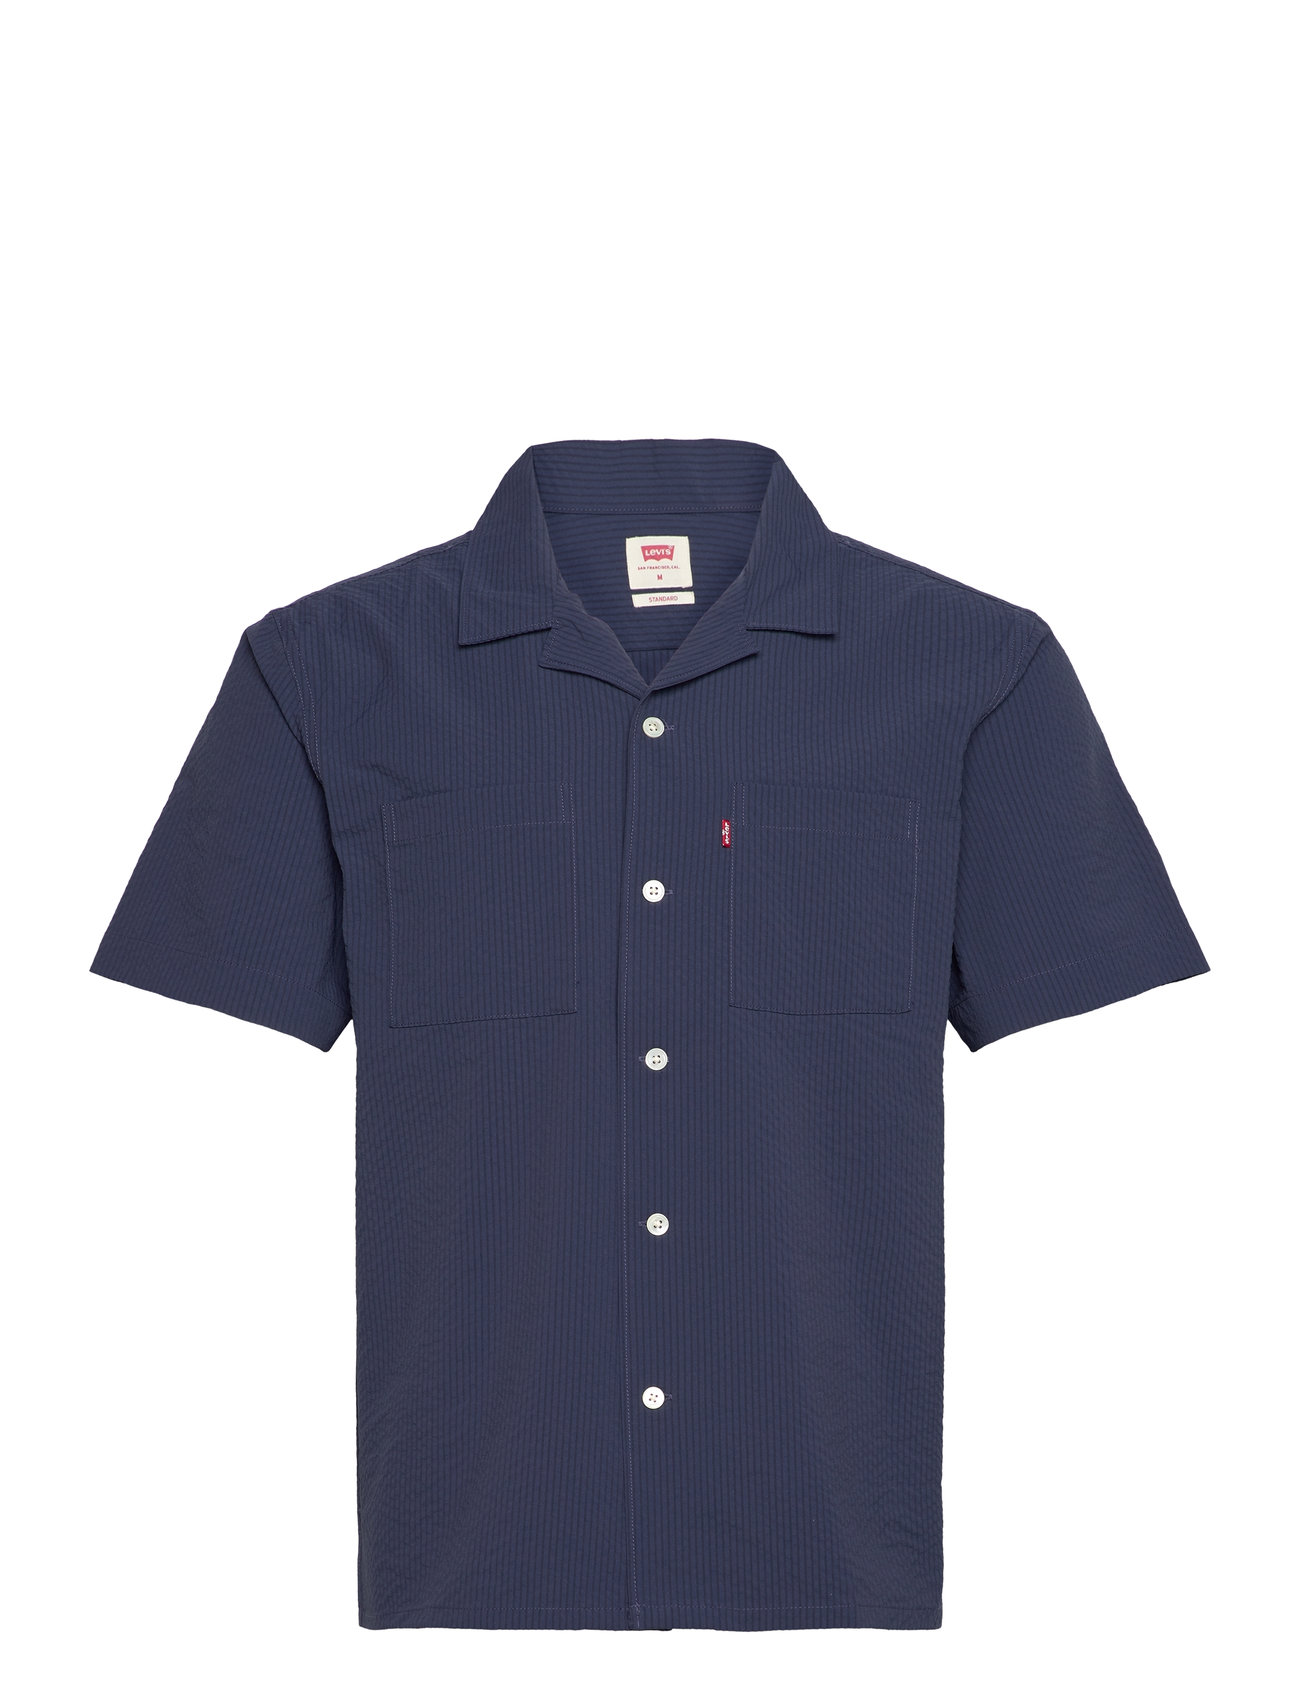 The Standard Camp Shirt Naval Tops Shirts Short-sleeved Blue LEVI´S Men